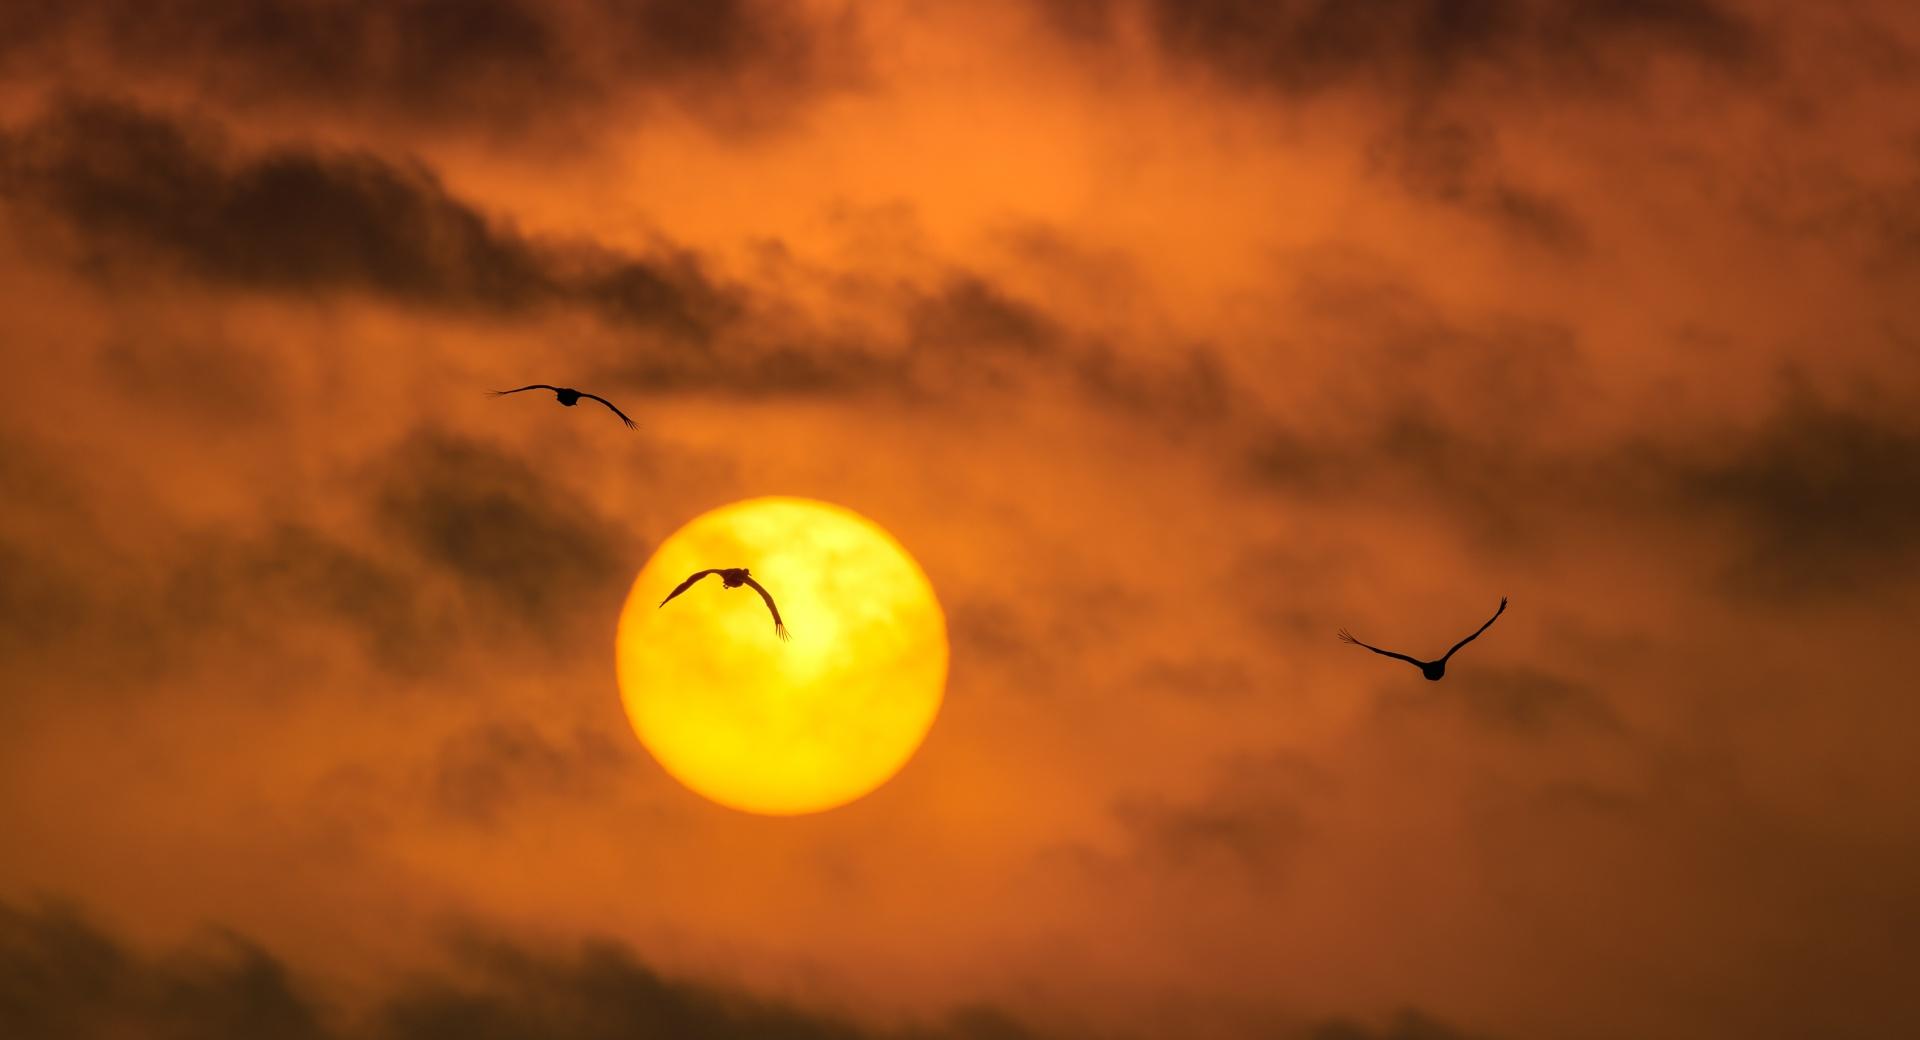 Sandhill Cranes Birds, Sunrise at 1024 x 1024 iPad size wallpapers HD quality